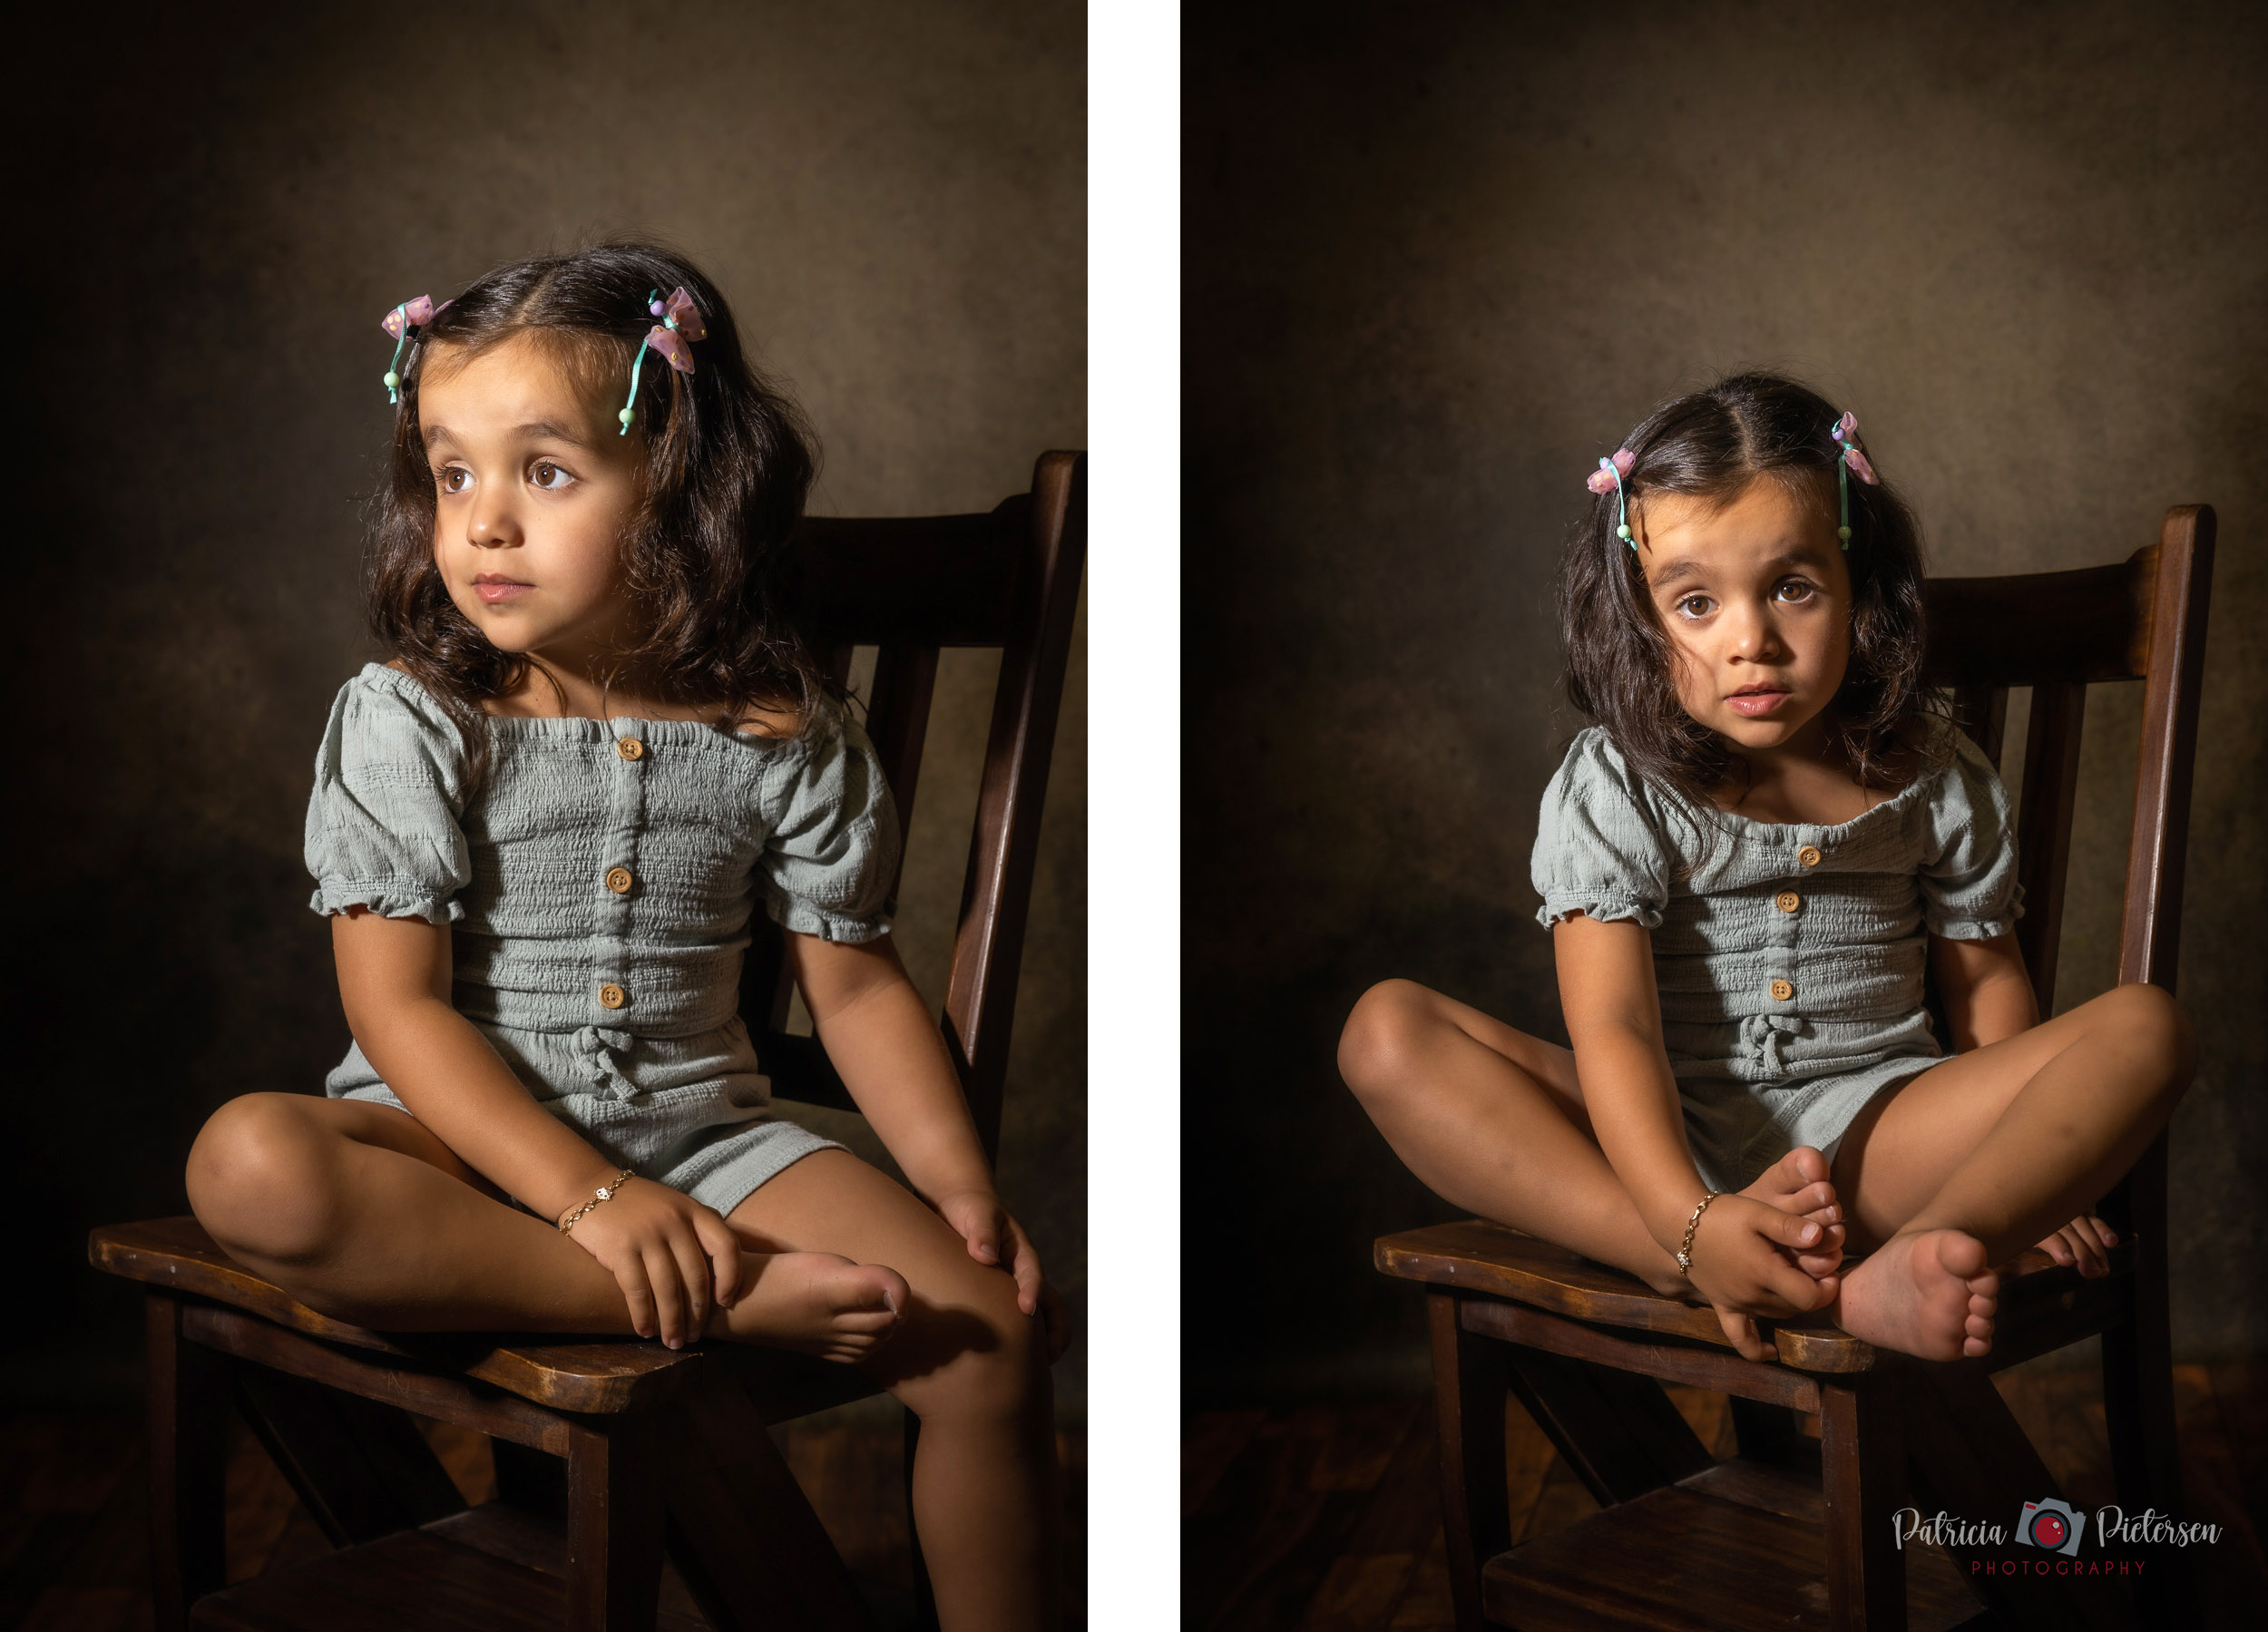 Sara Kinderfotografie Portret Studioreportage Fotograaf Lelystad Patricia Pietersen Photography 9